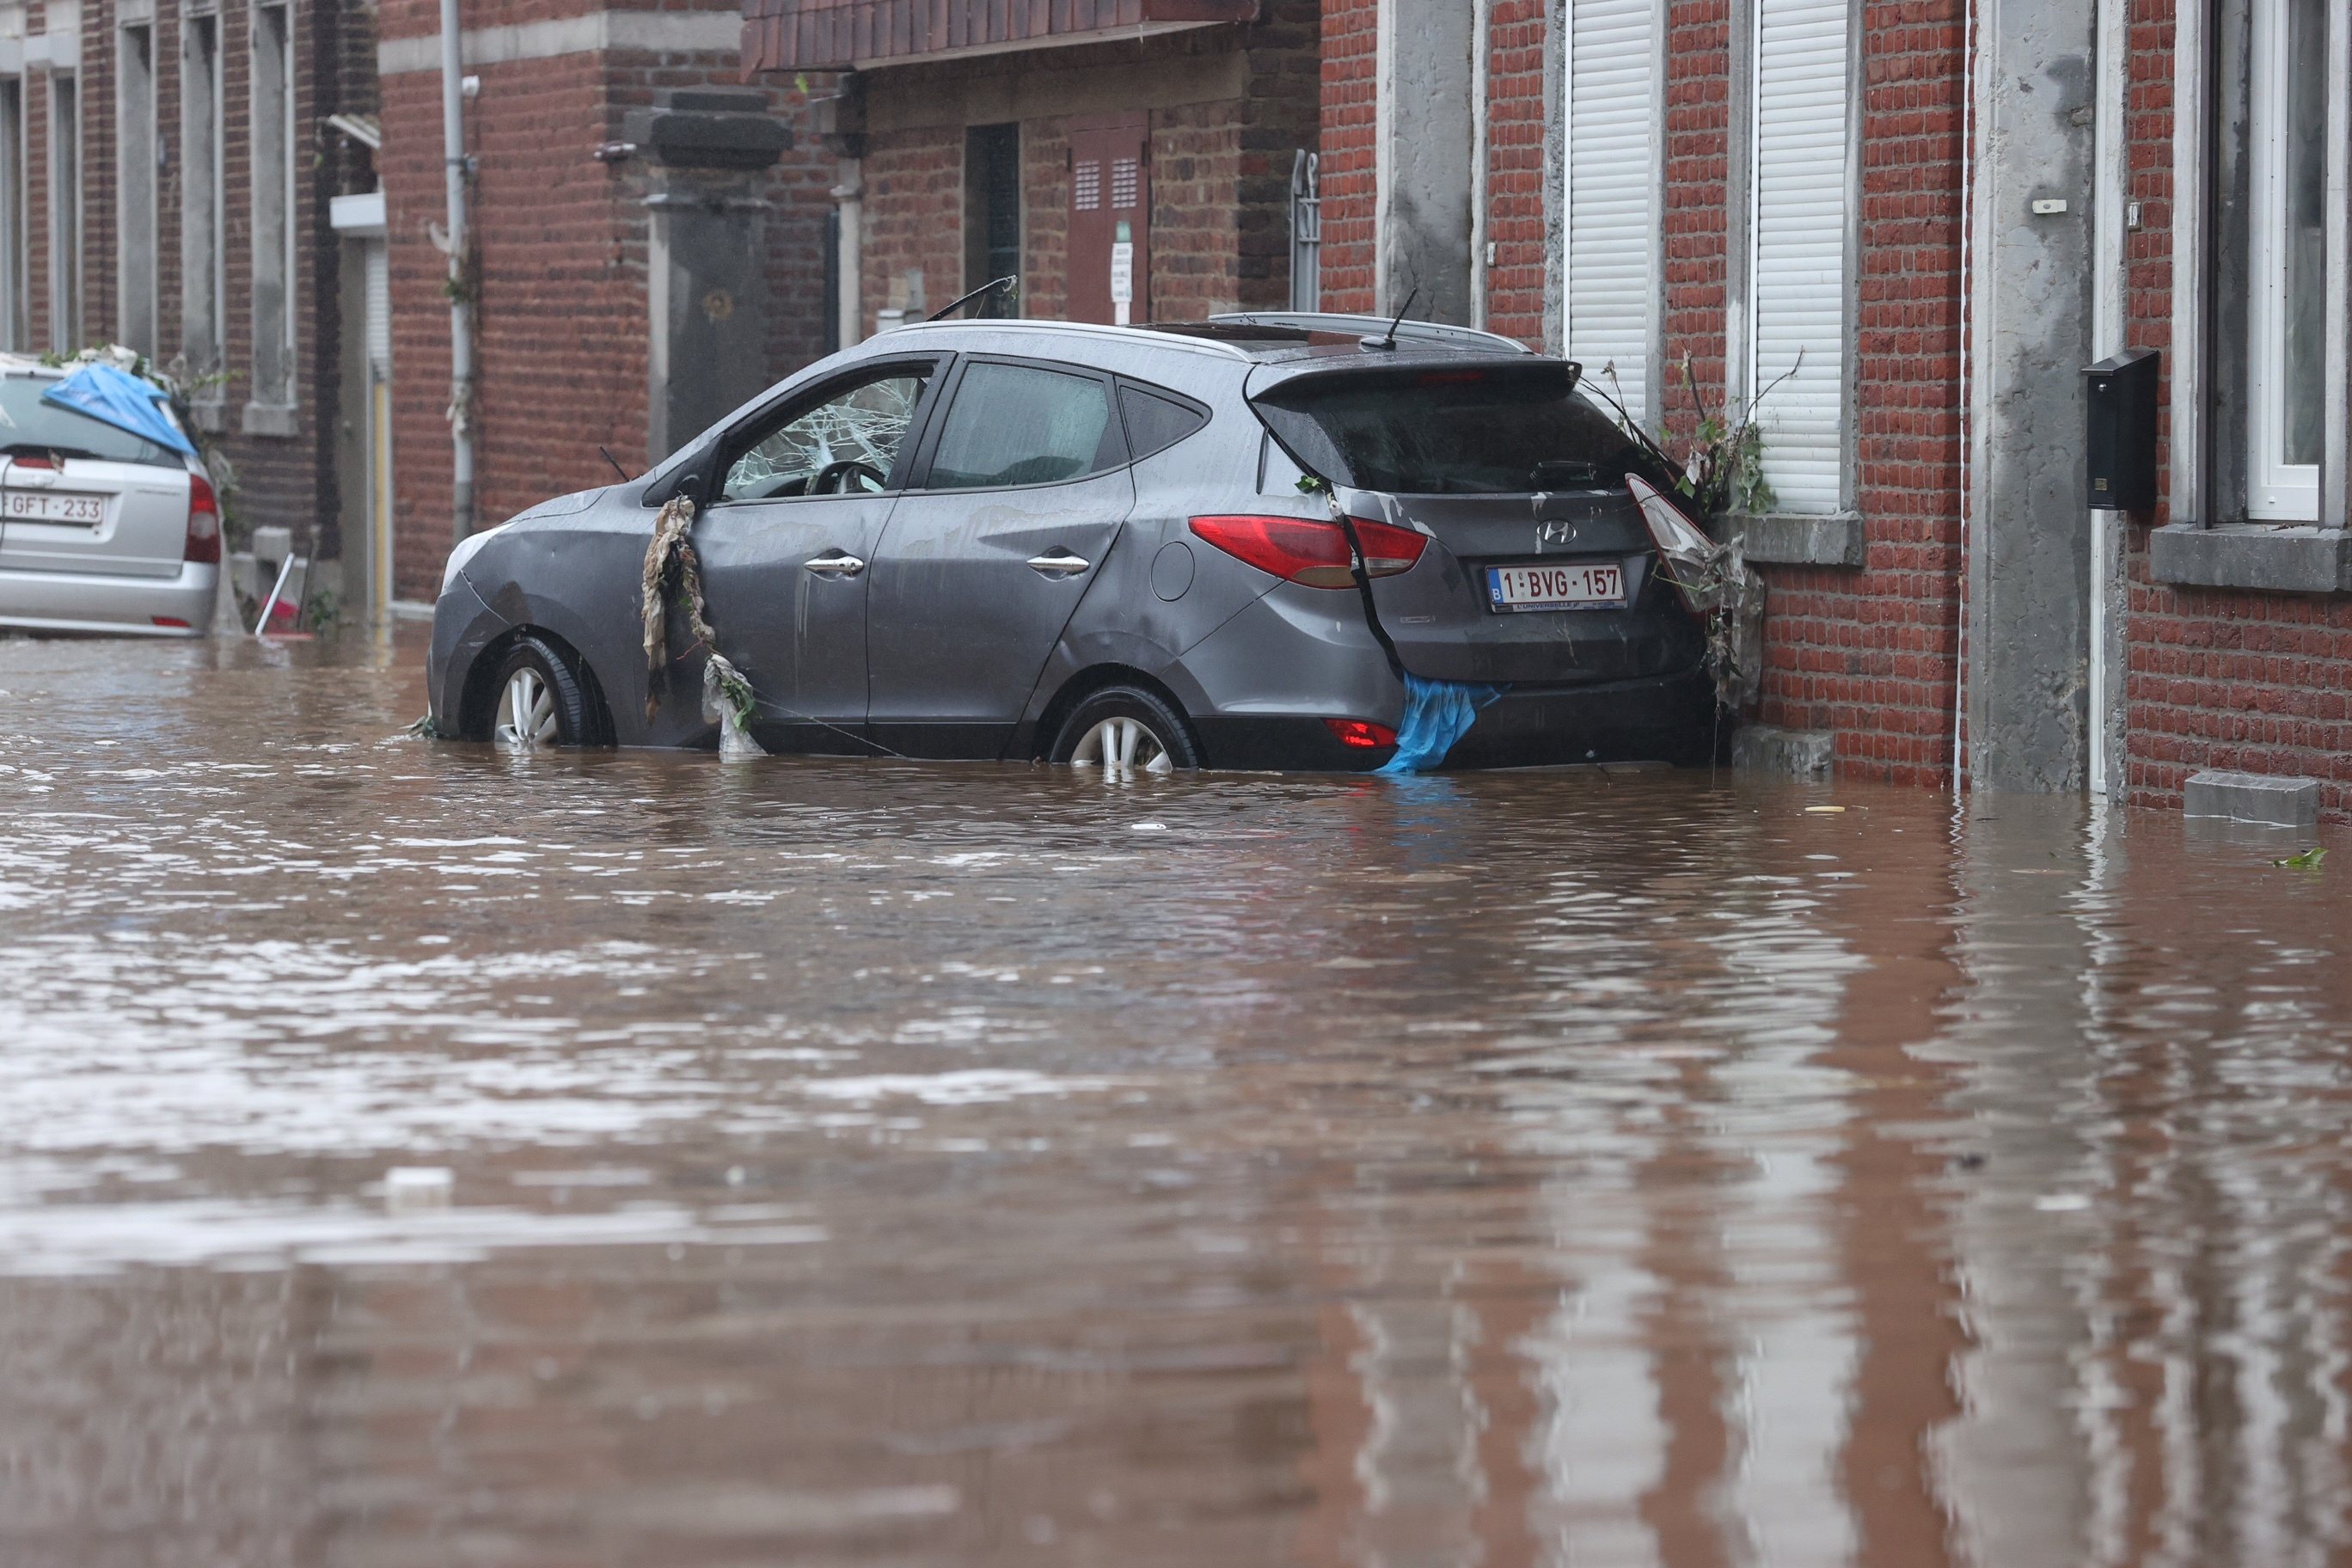 Flooded streets in Belgium as heavy rain in the region